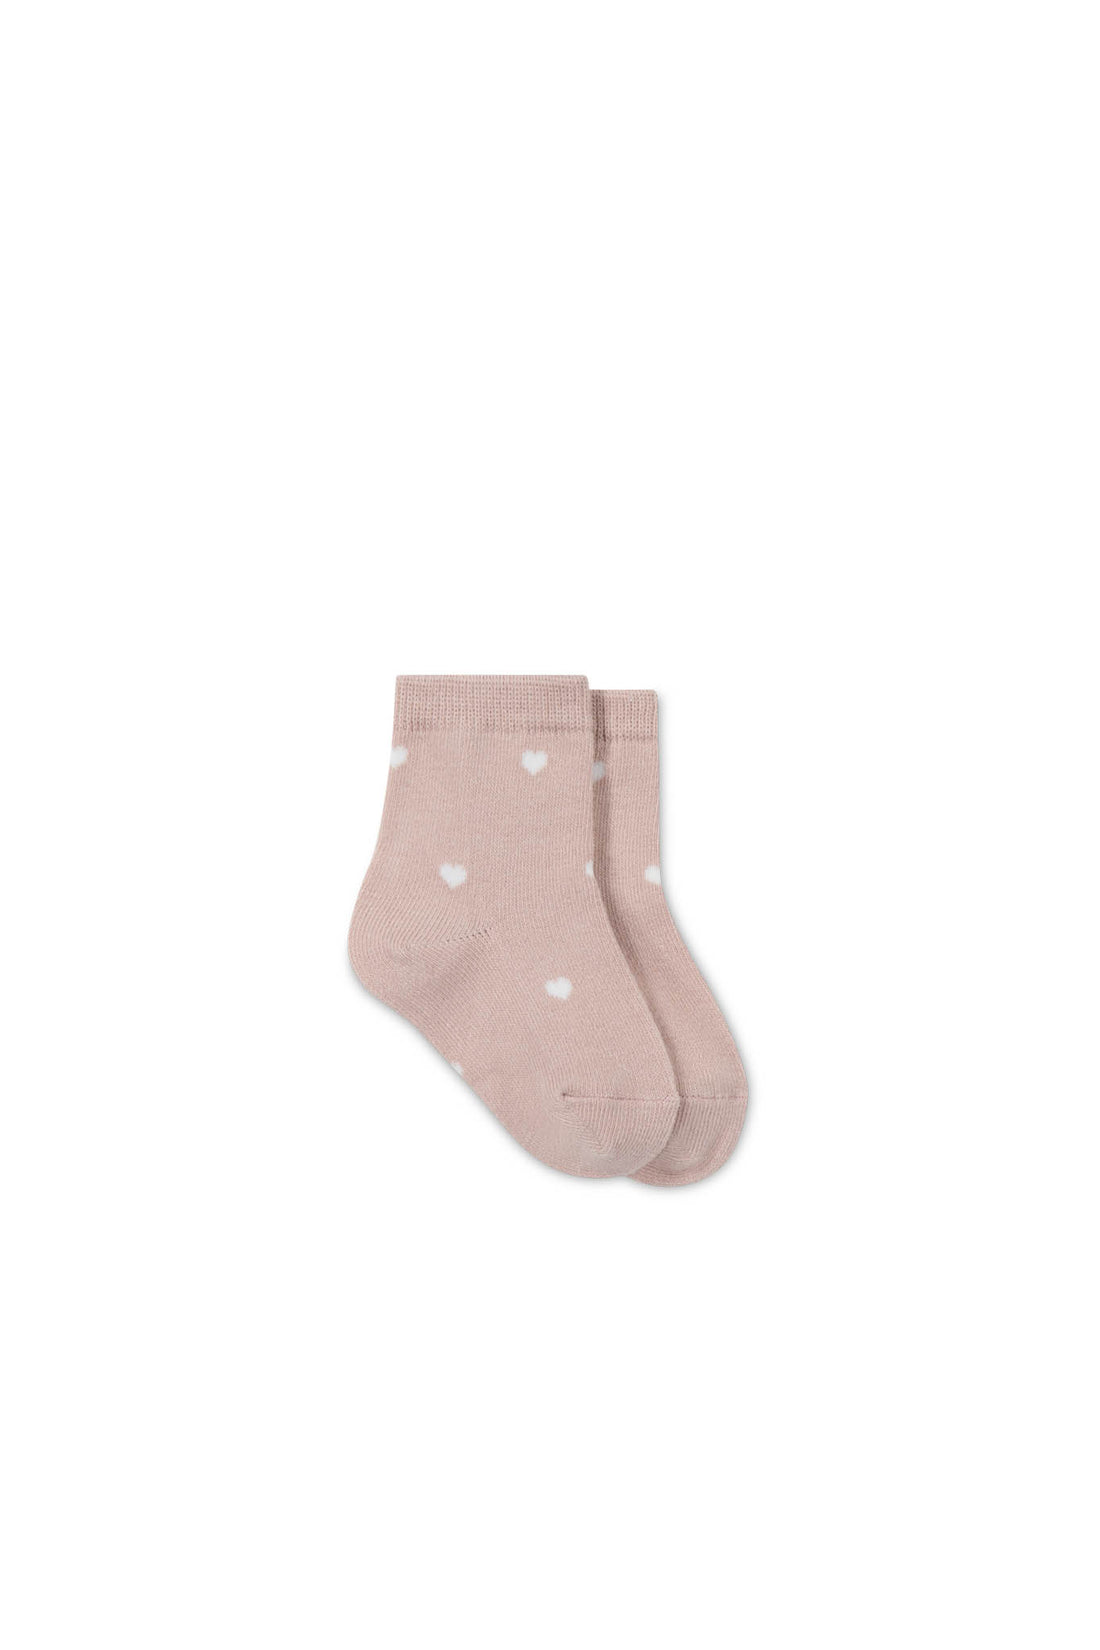 Harlow Sock - Petite Heart Rose Childrens Sock from Jamie Kay NZ